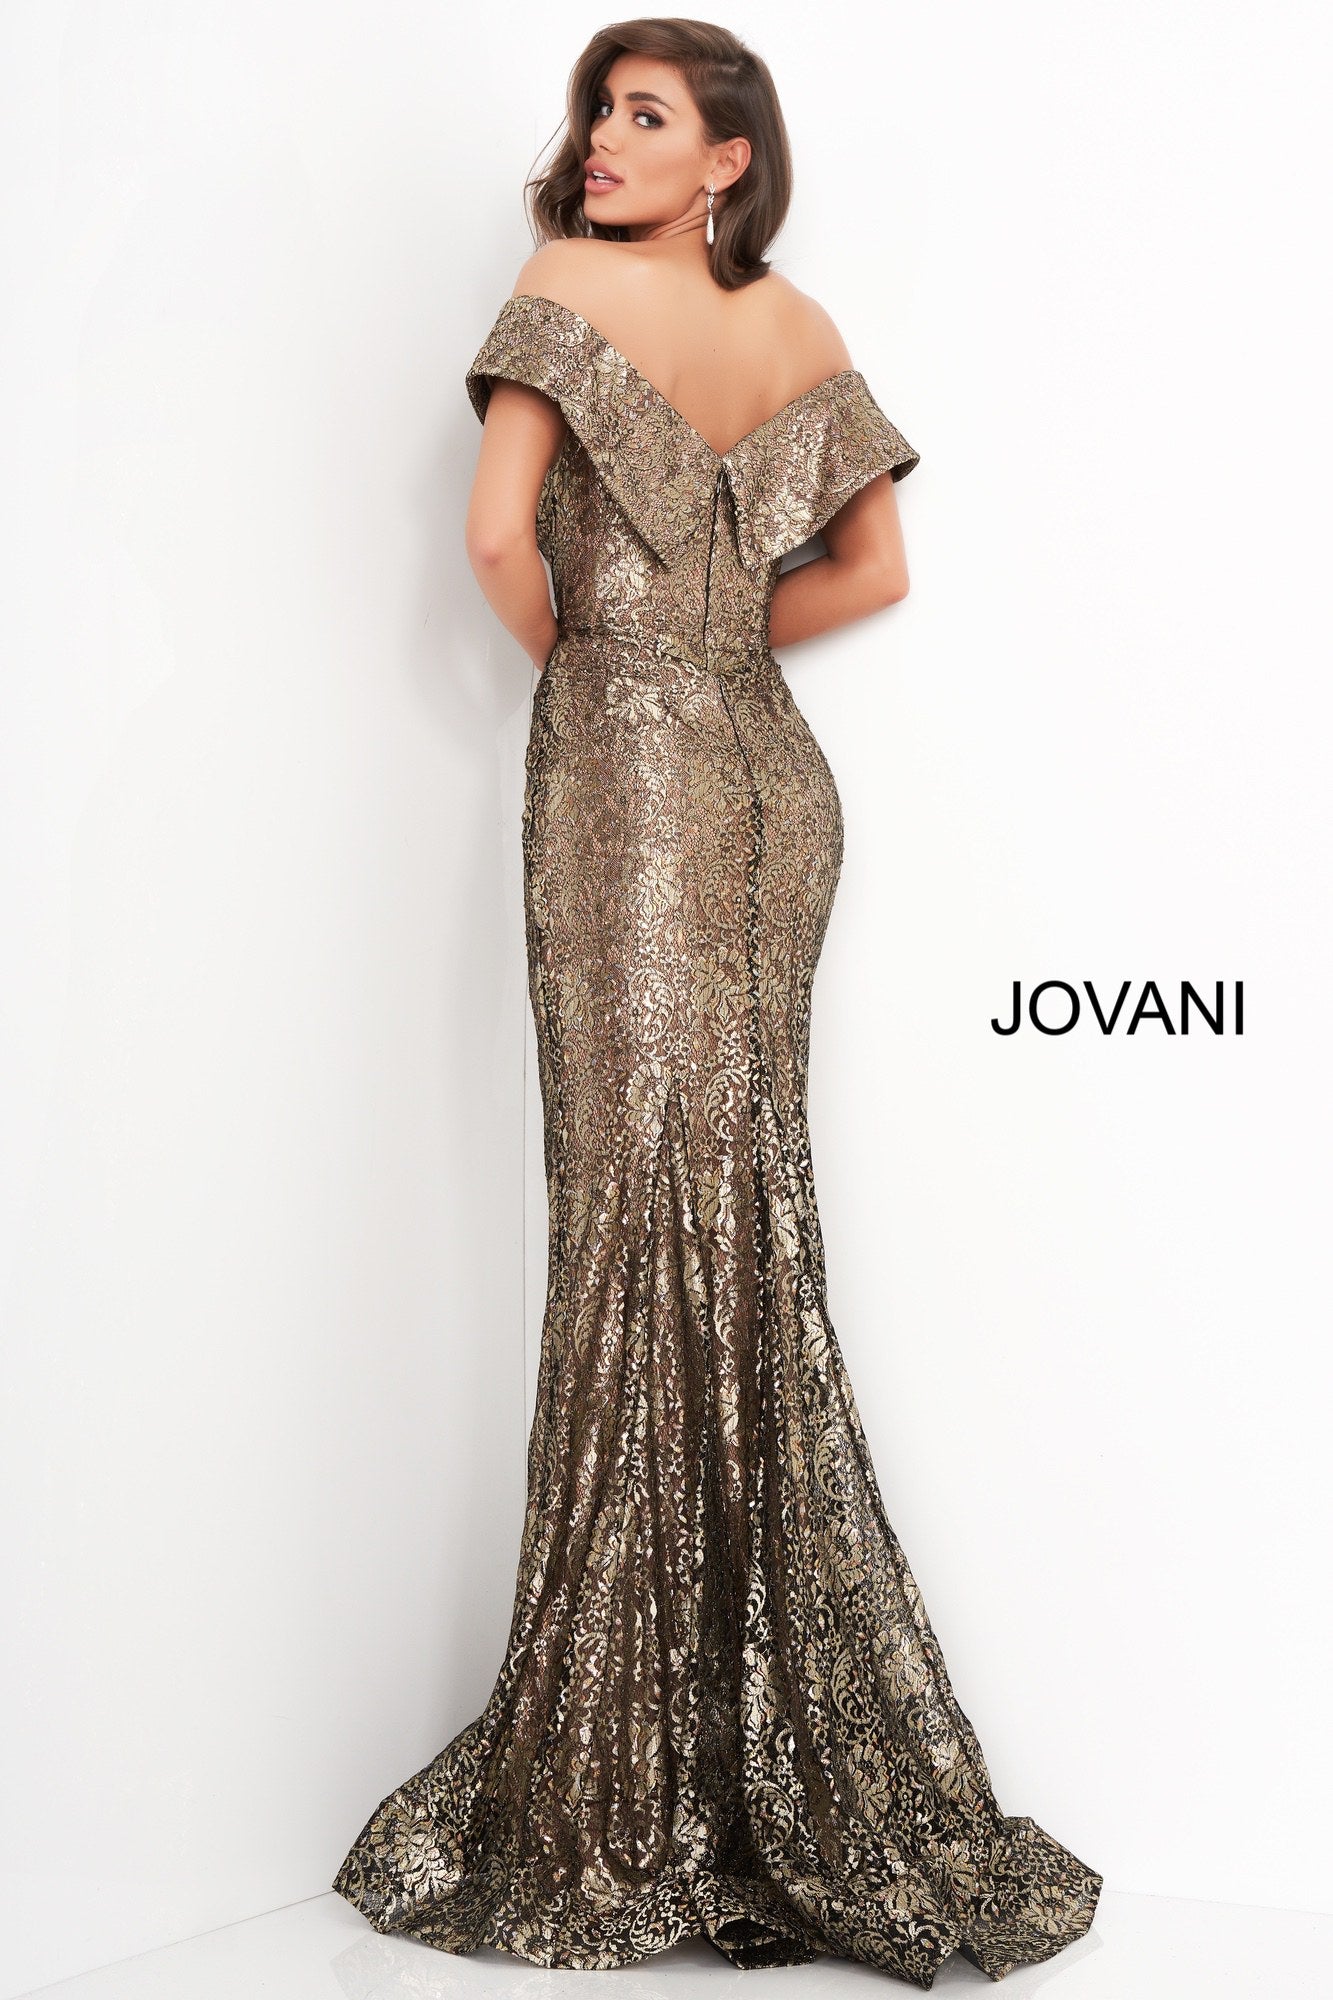 Jovani 02920 Gold lace dress off the shoulder mothers dress